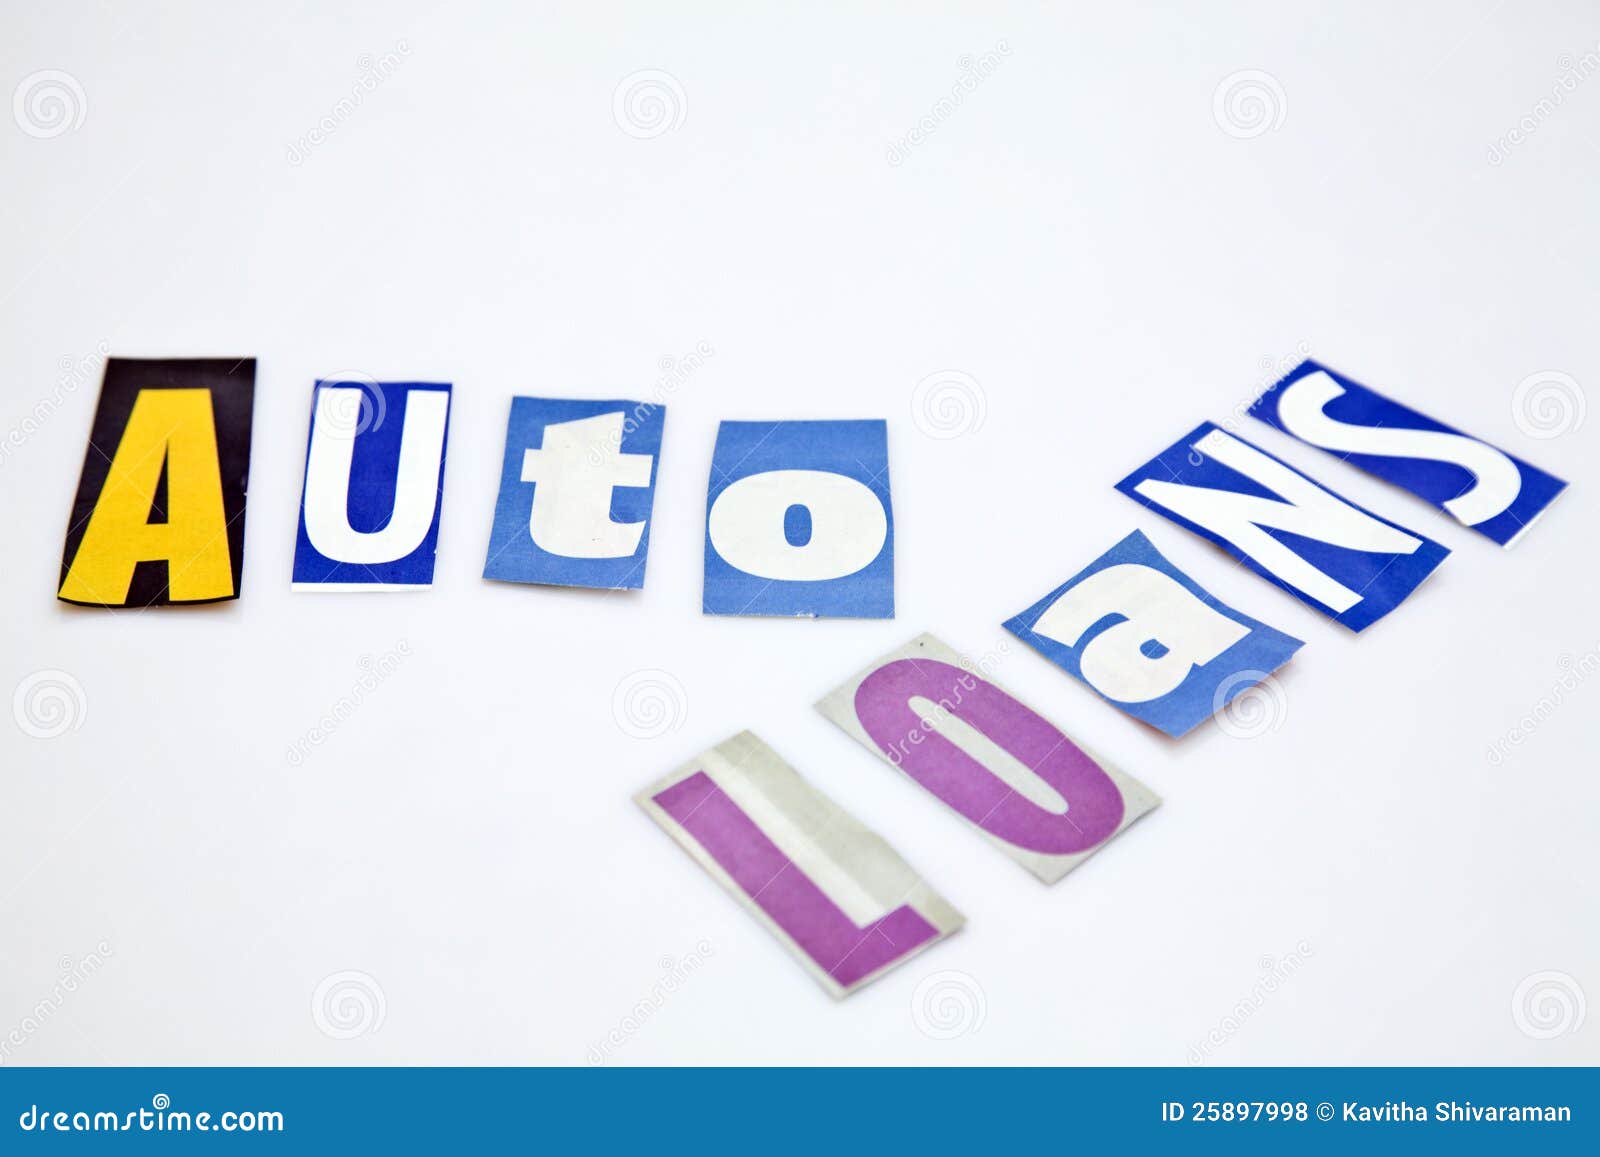 auto-loans-25897998.jpg